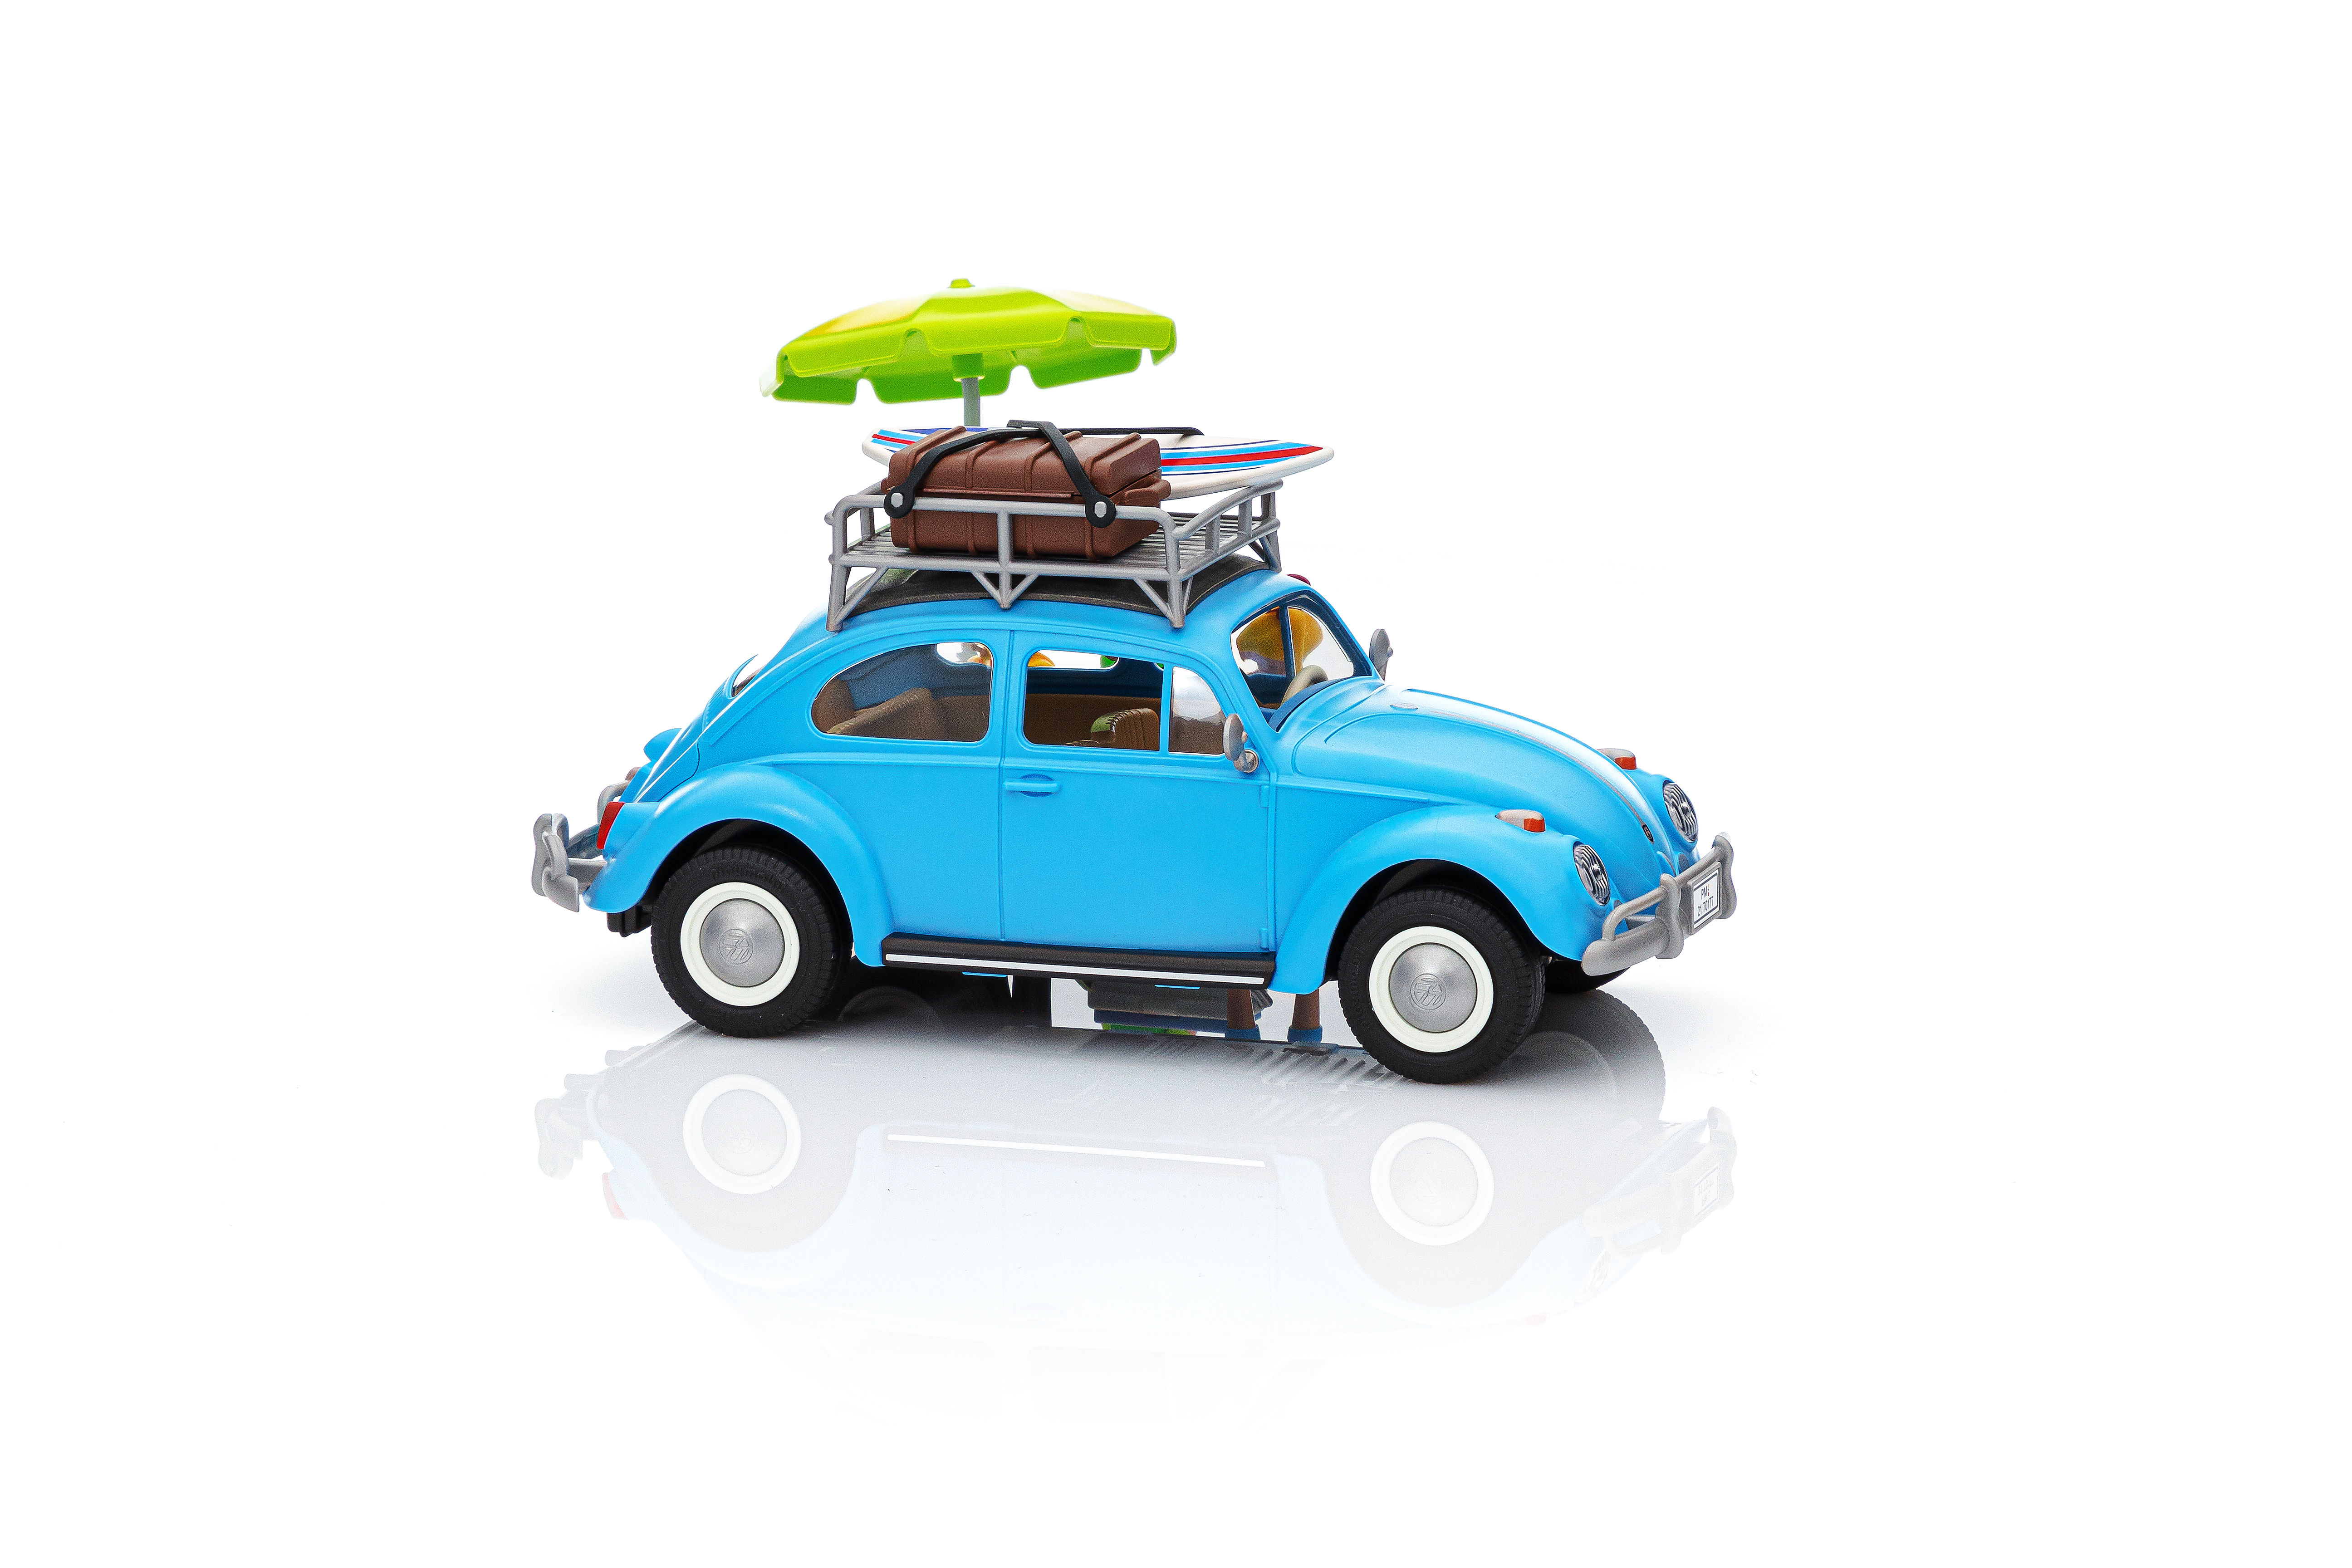 Playmobil Volkswagen Beetle Model, Playmobil now has a numb…